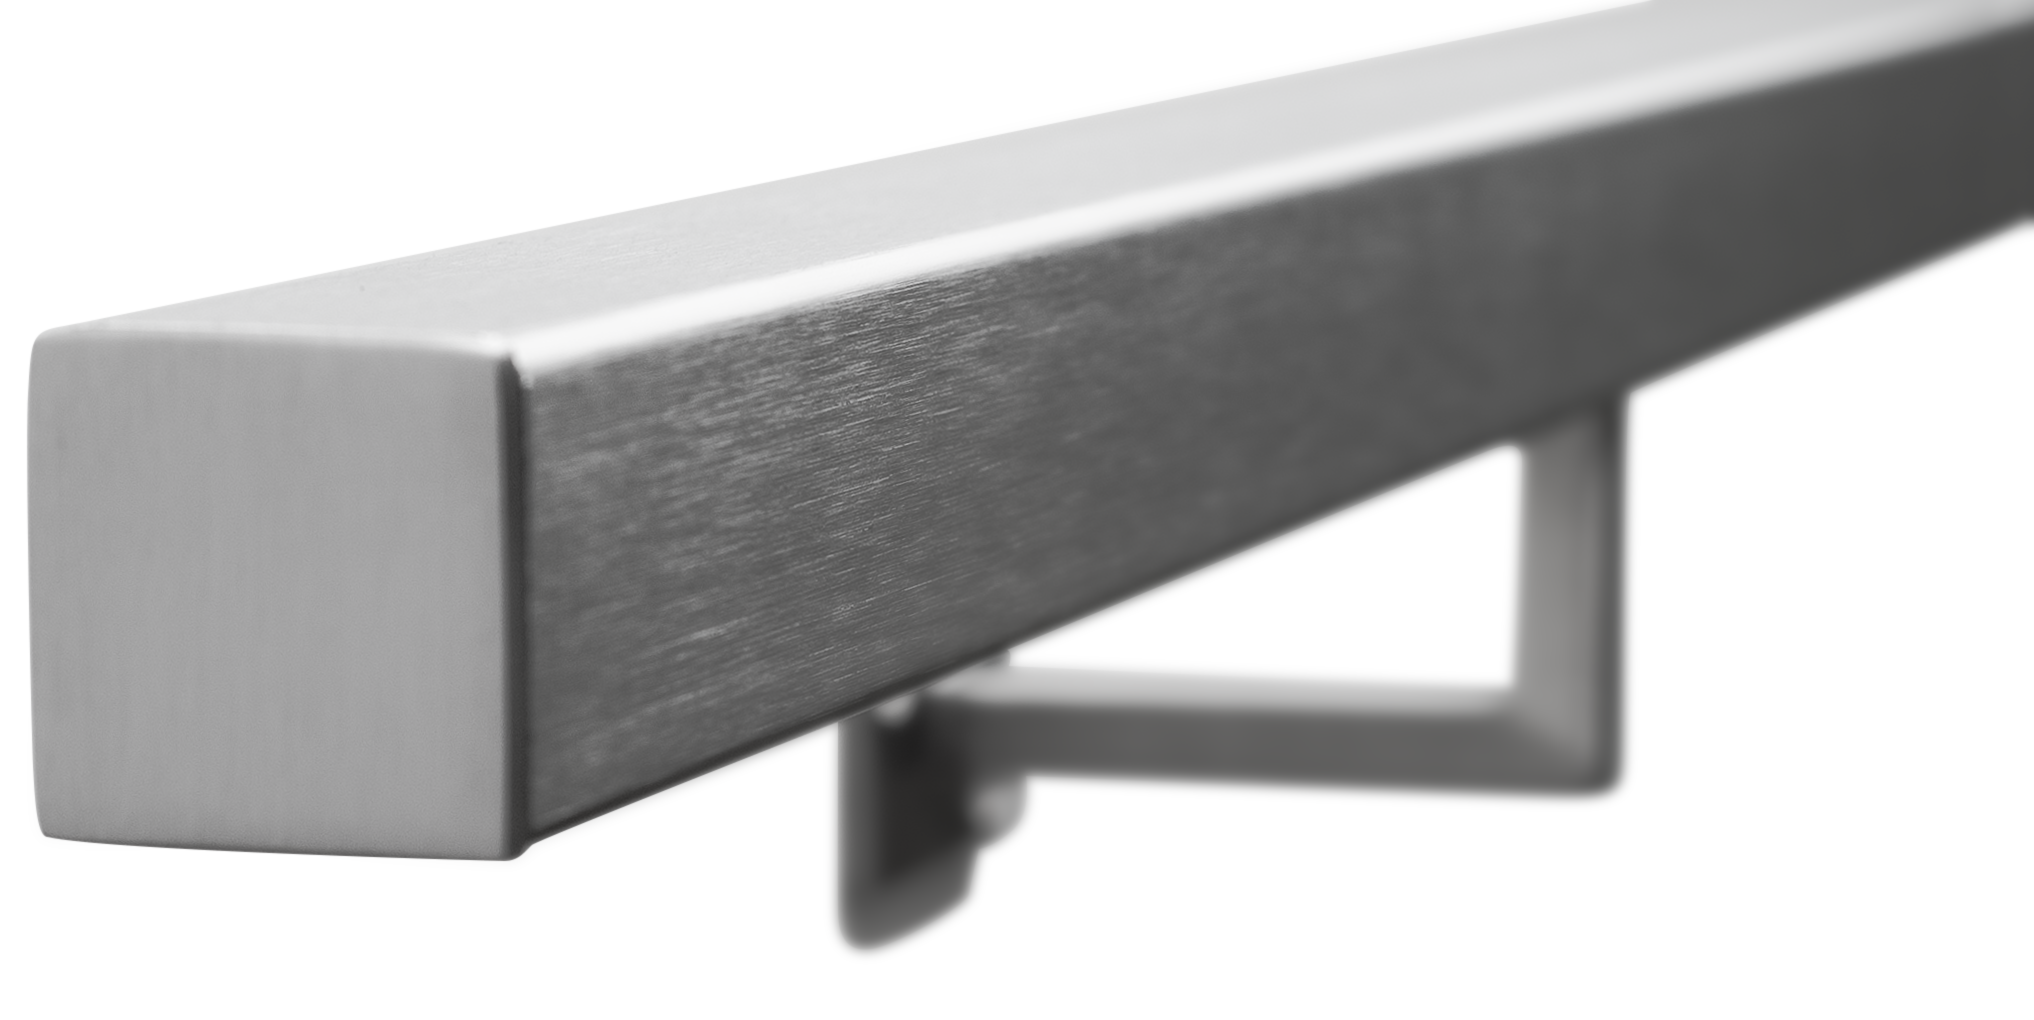 Brushed Stainless Steel Metal Banister Stair Handrail: Pre ...